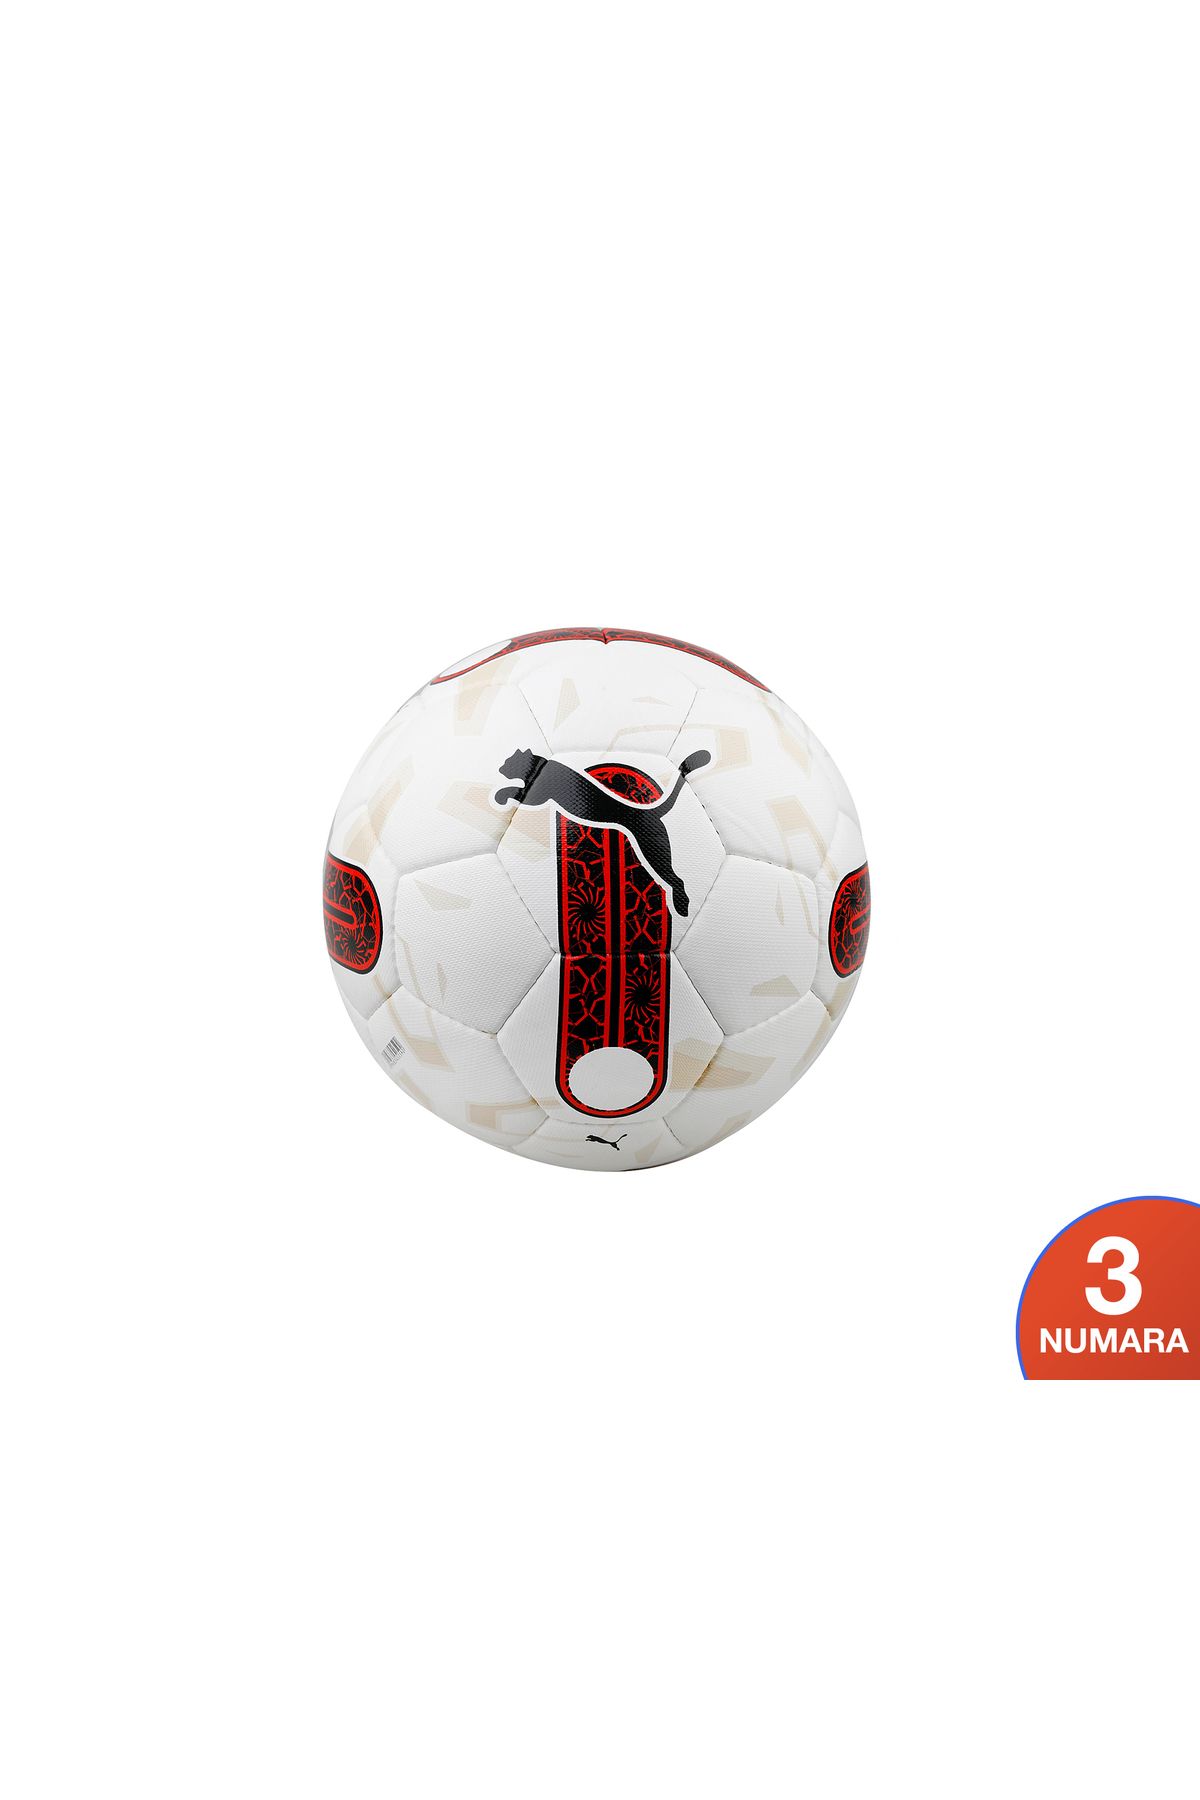 Puma Orbita Süper Lig 6 Hs Futbol Topu 08419801-3 Krem